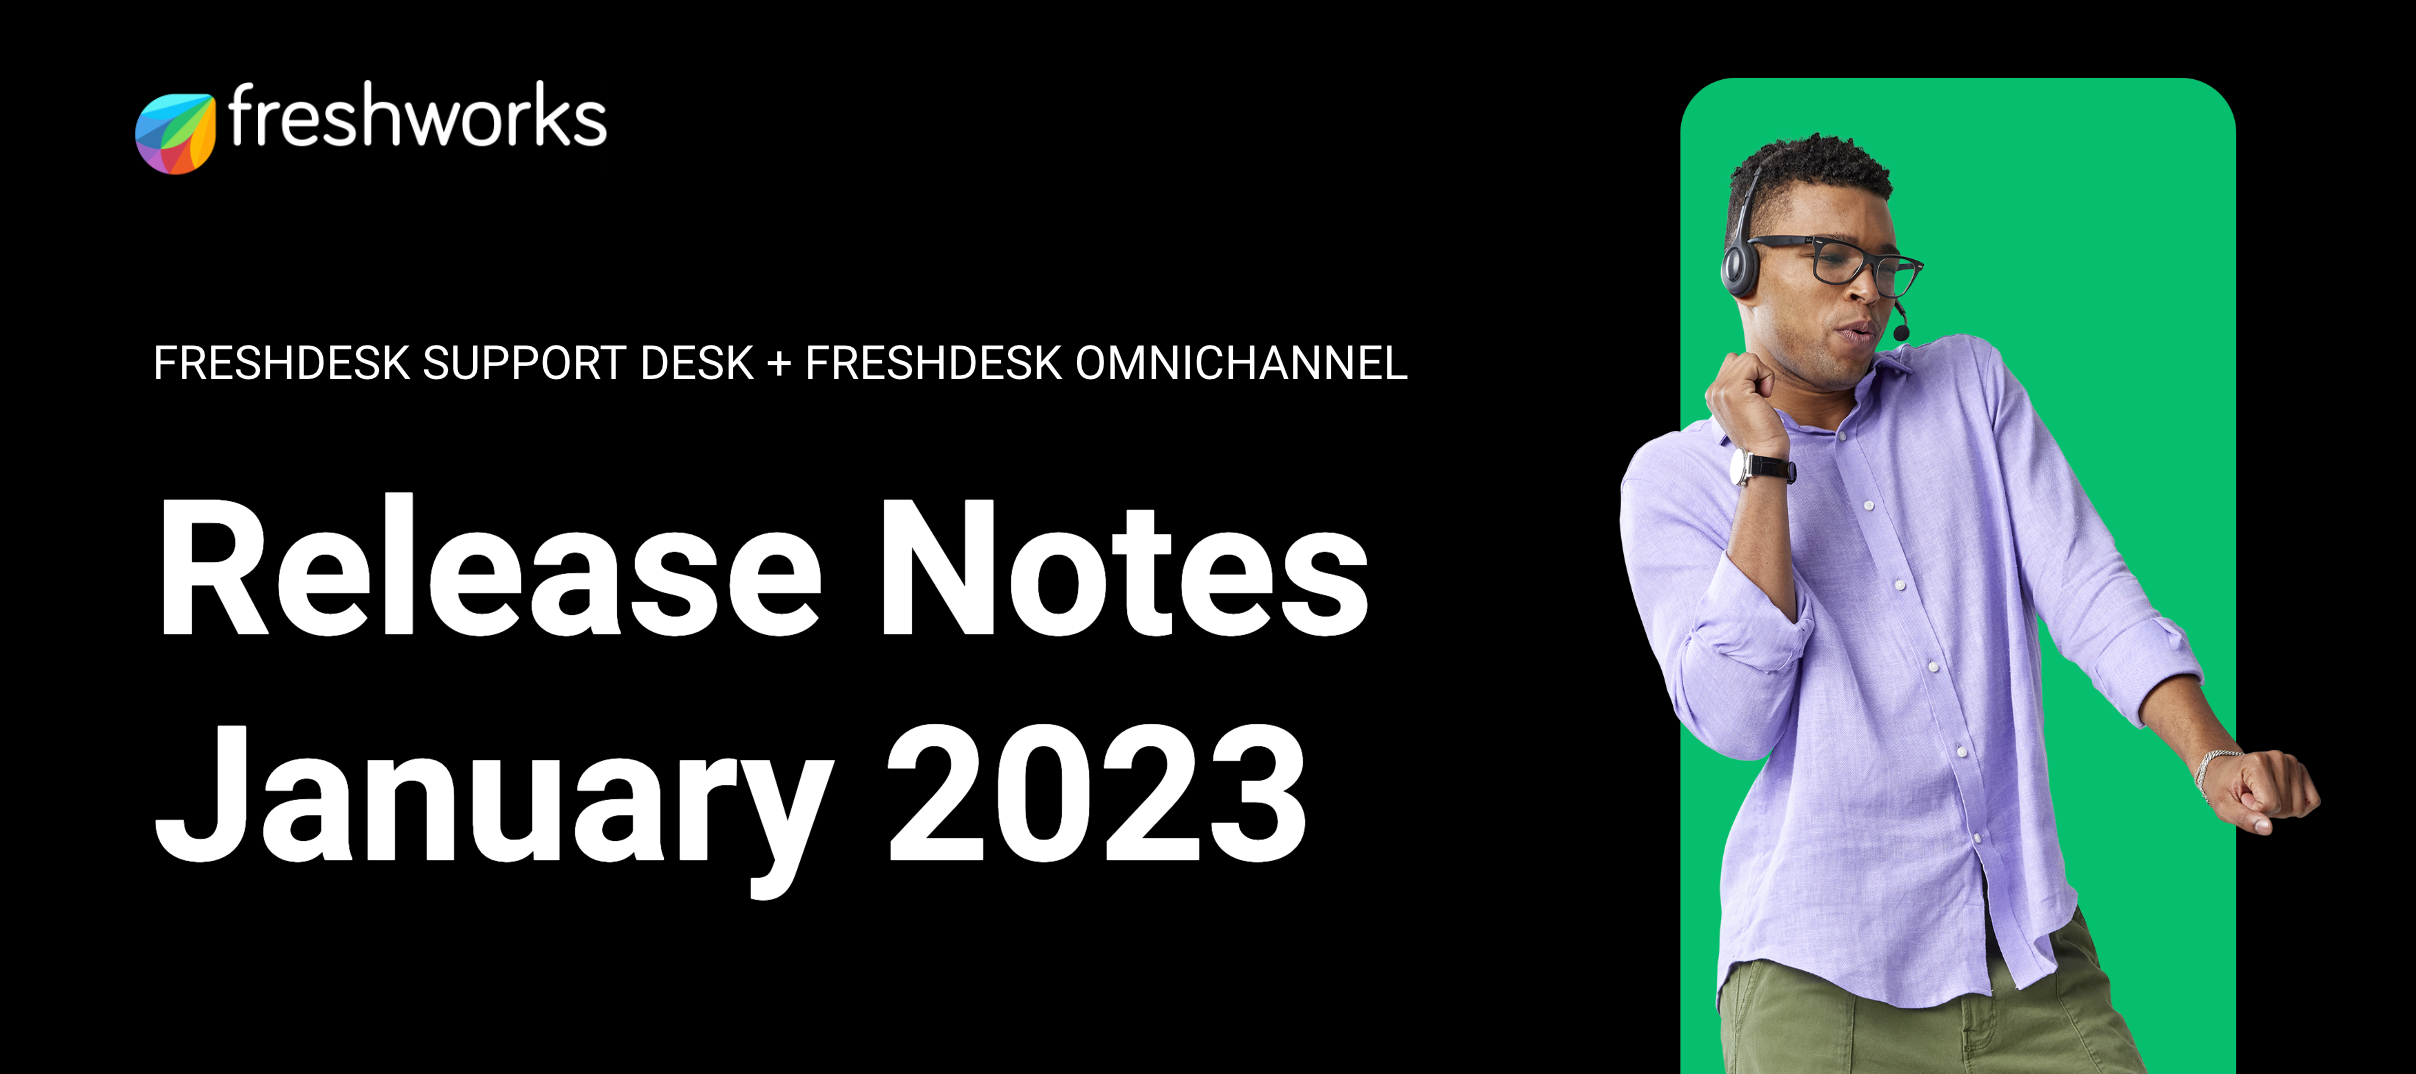 Freshdesk and Freshdesk Omnichannel Release Notes - January 2023